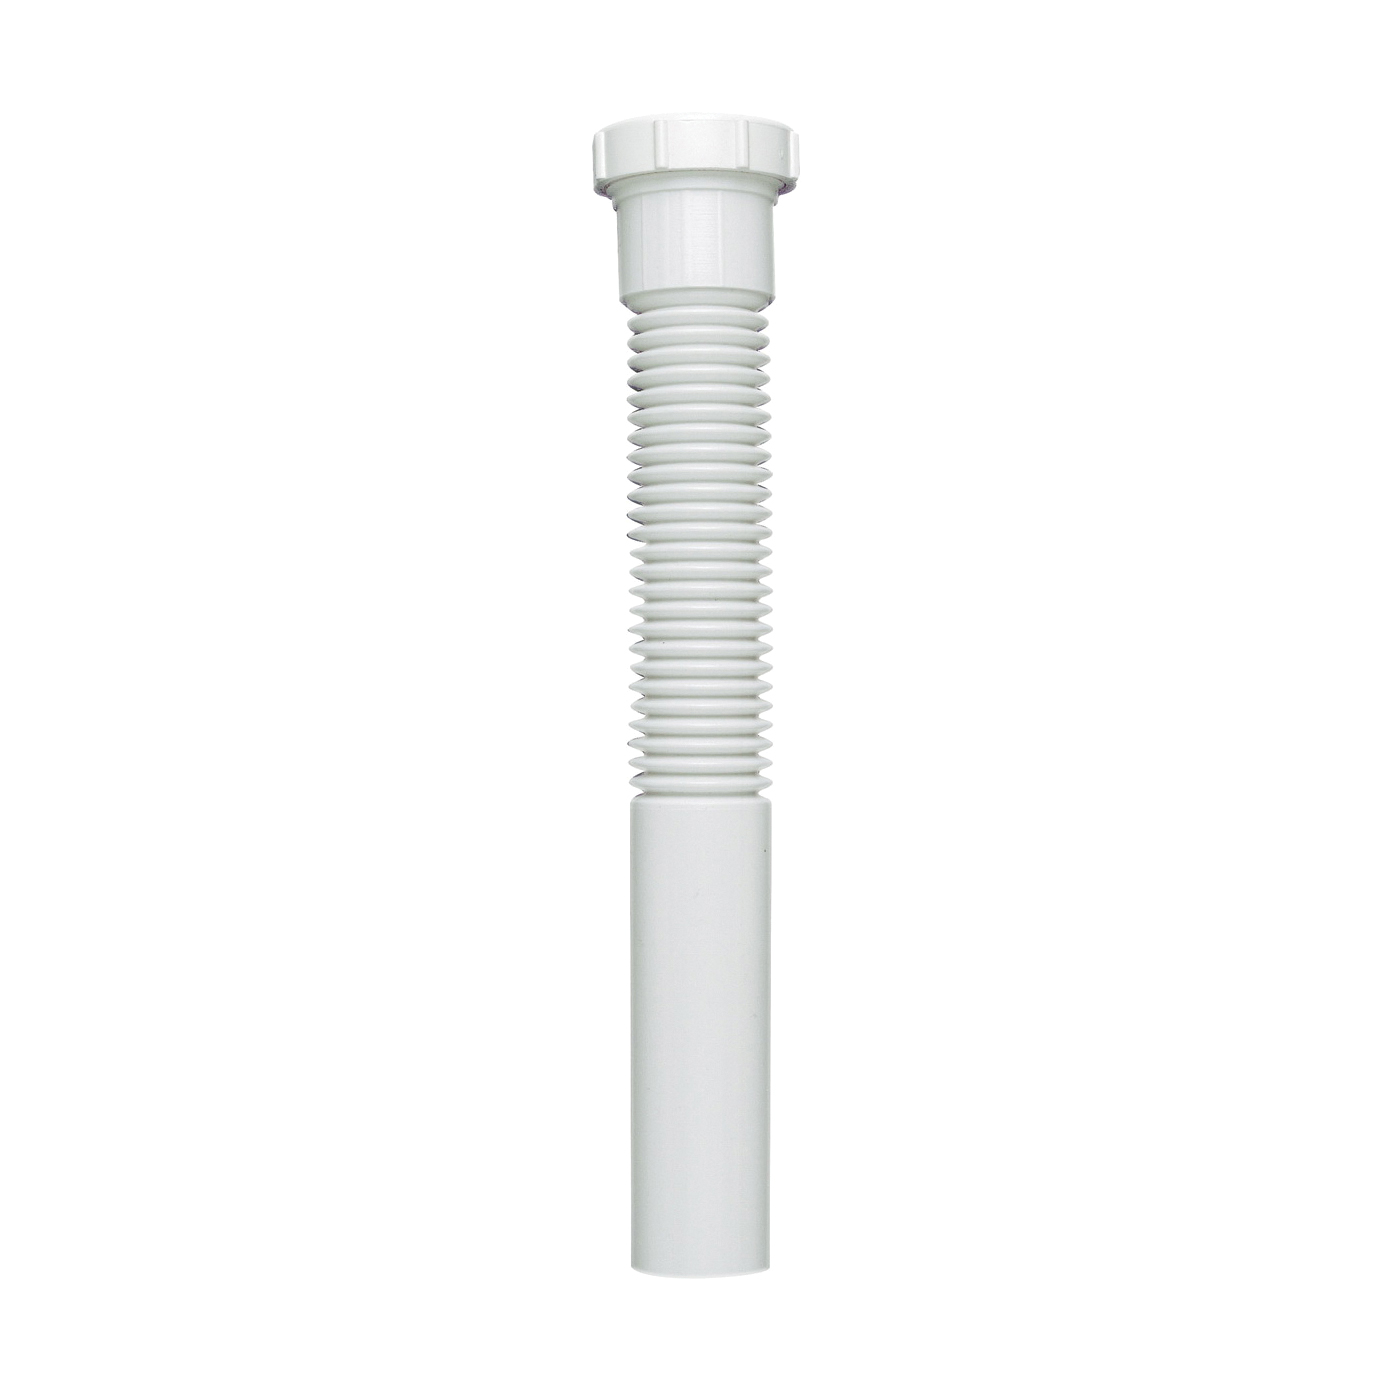 PP812-6 Pipe Extension Tube, 1-1/2 in, 12 in L, Slip Joint, Polypropylene, White